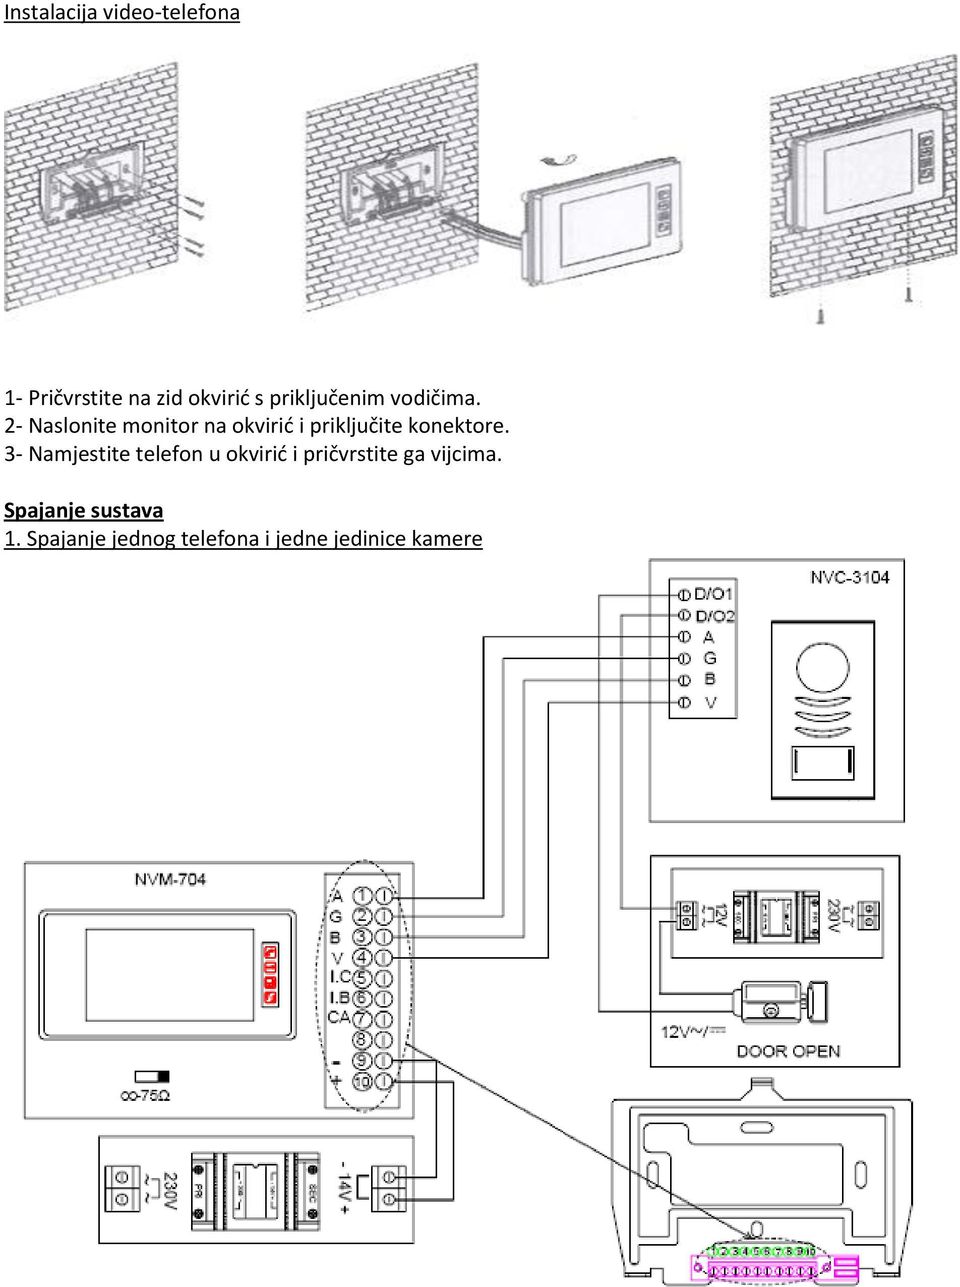 2- Naslonite monitor na okvirid i priključite konektore.